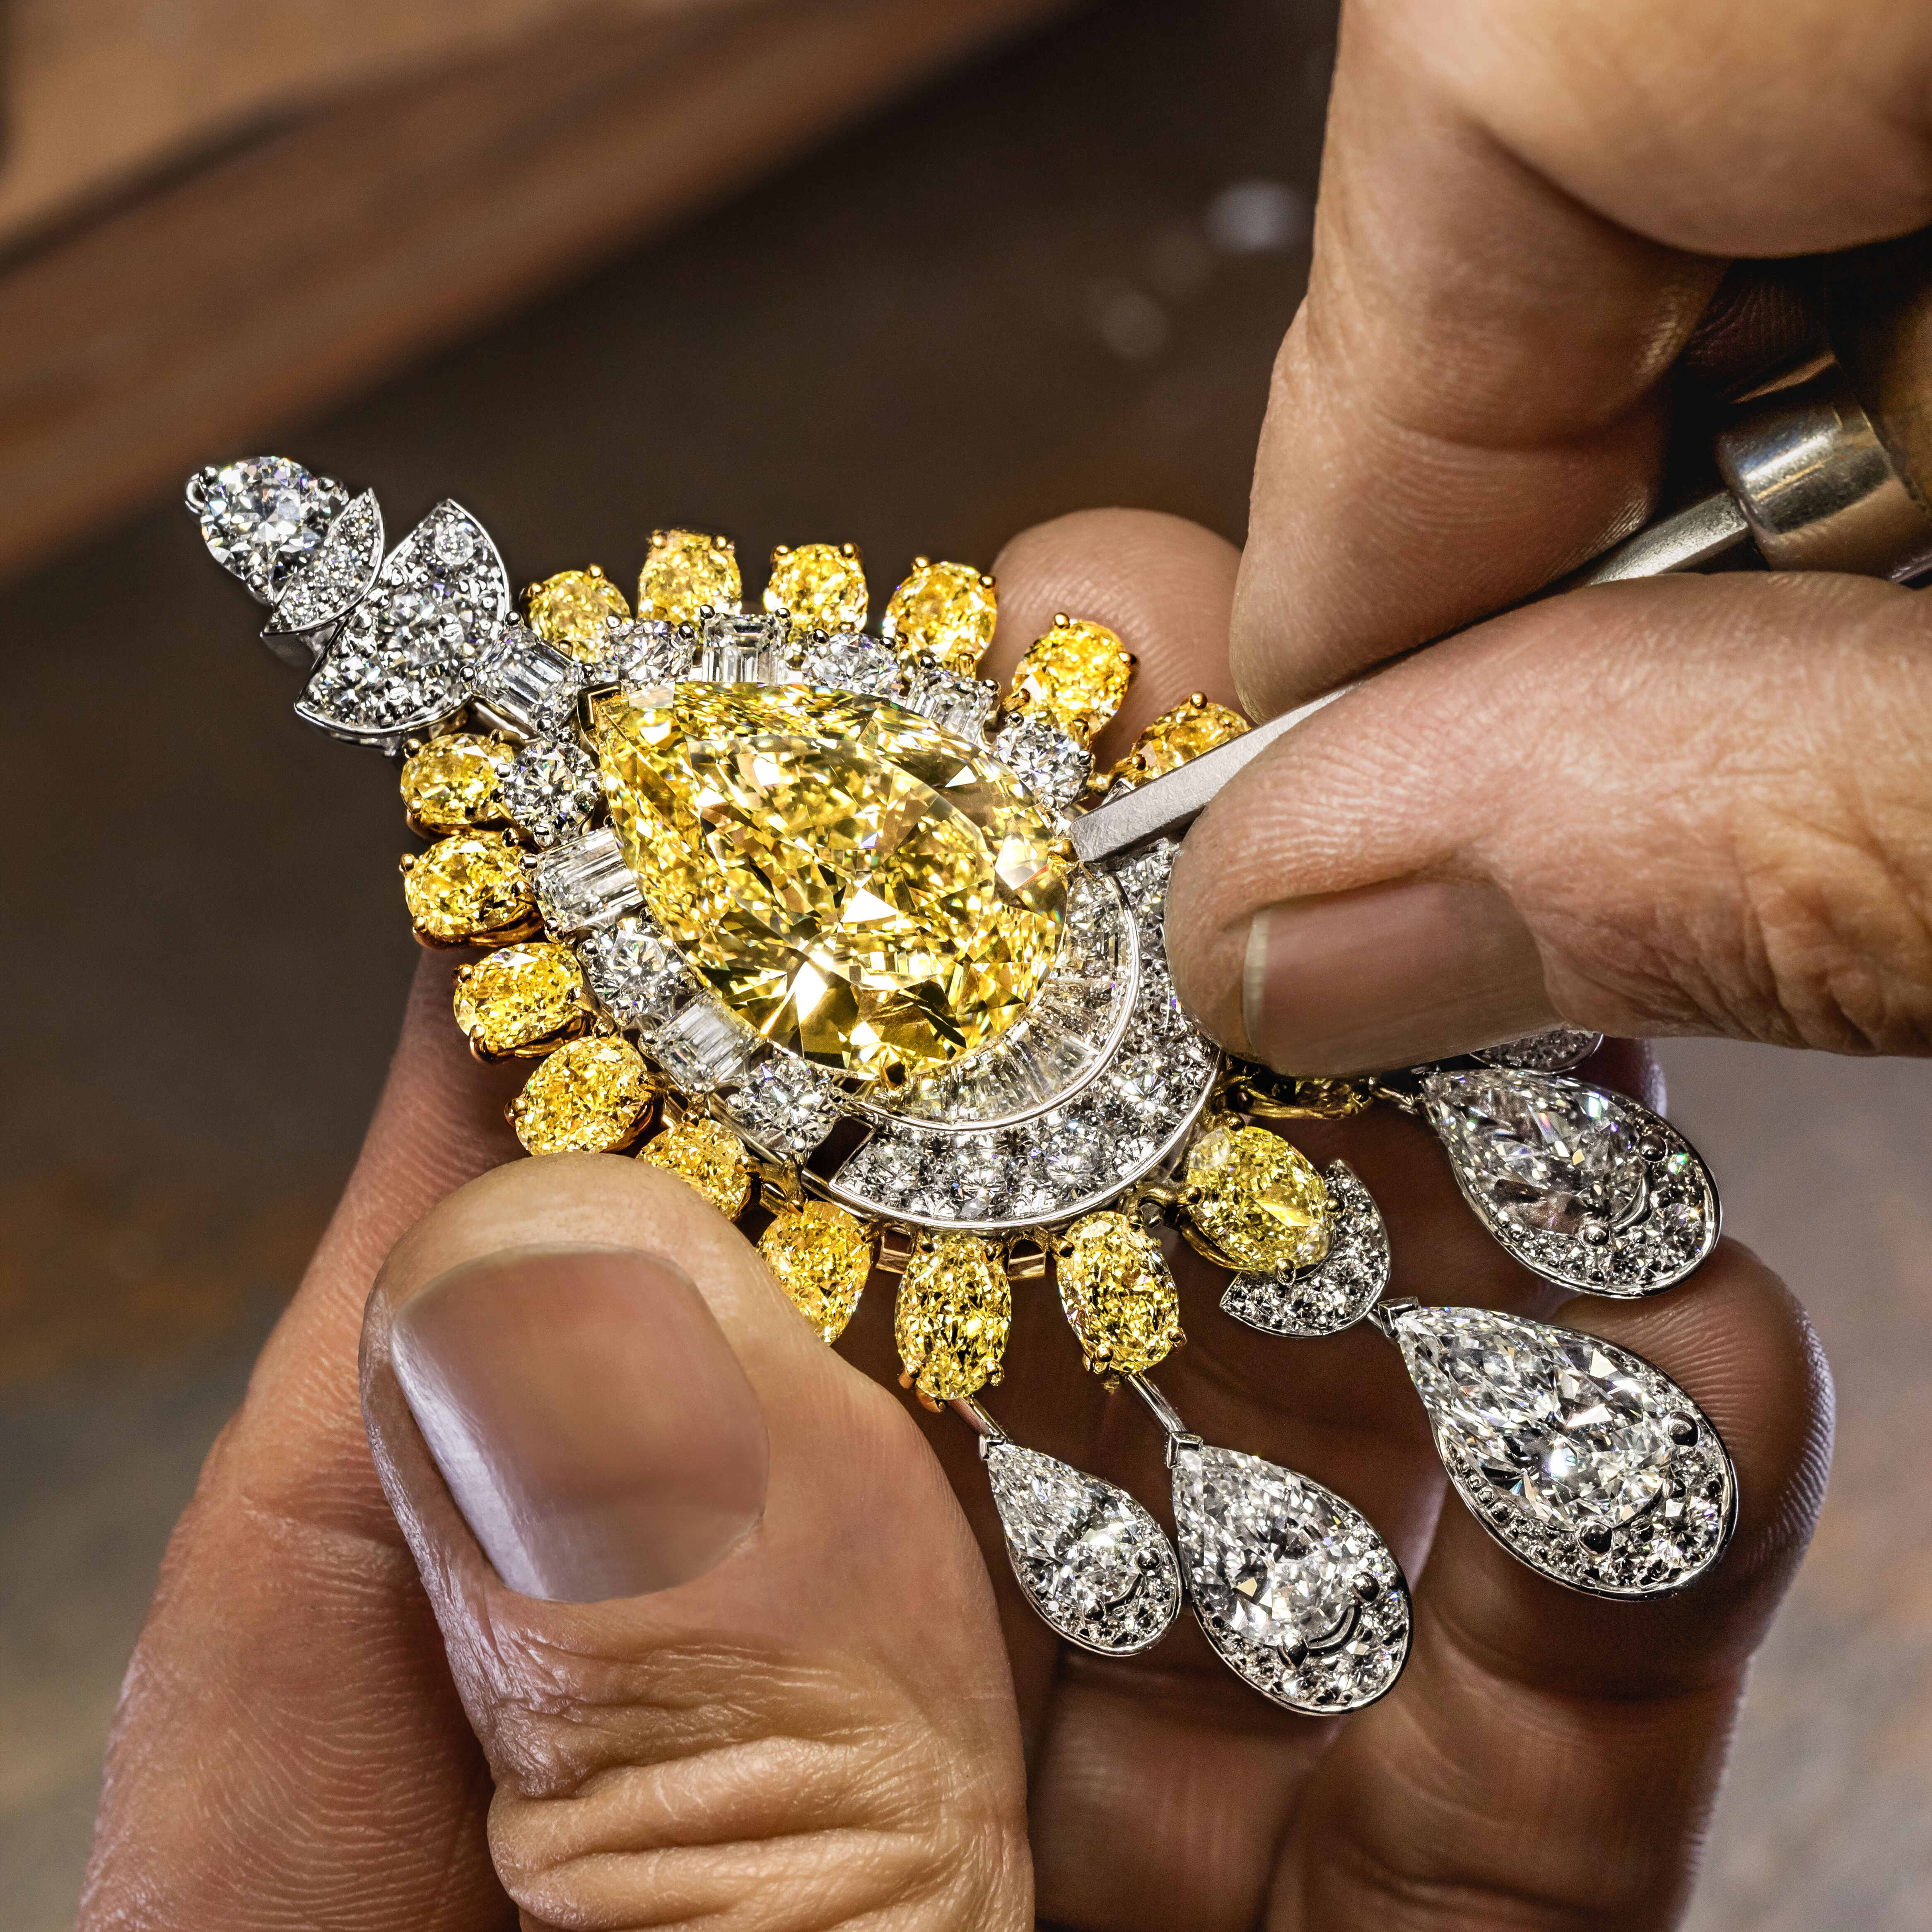 Image of Graff craftsman creating Graff yellow diamond high jewellery necklace in London workshop